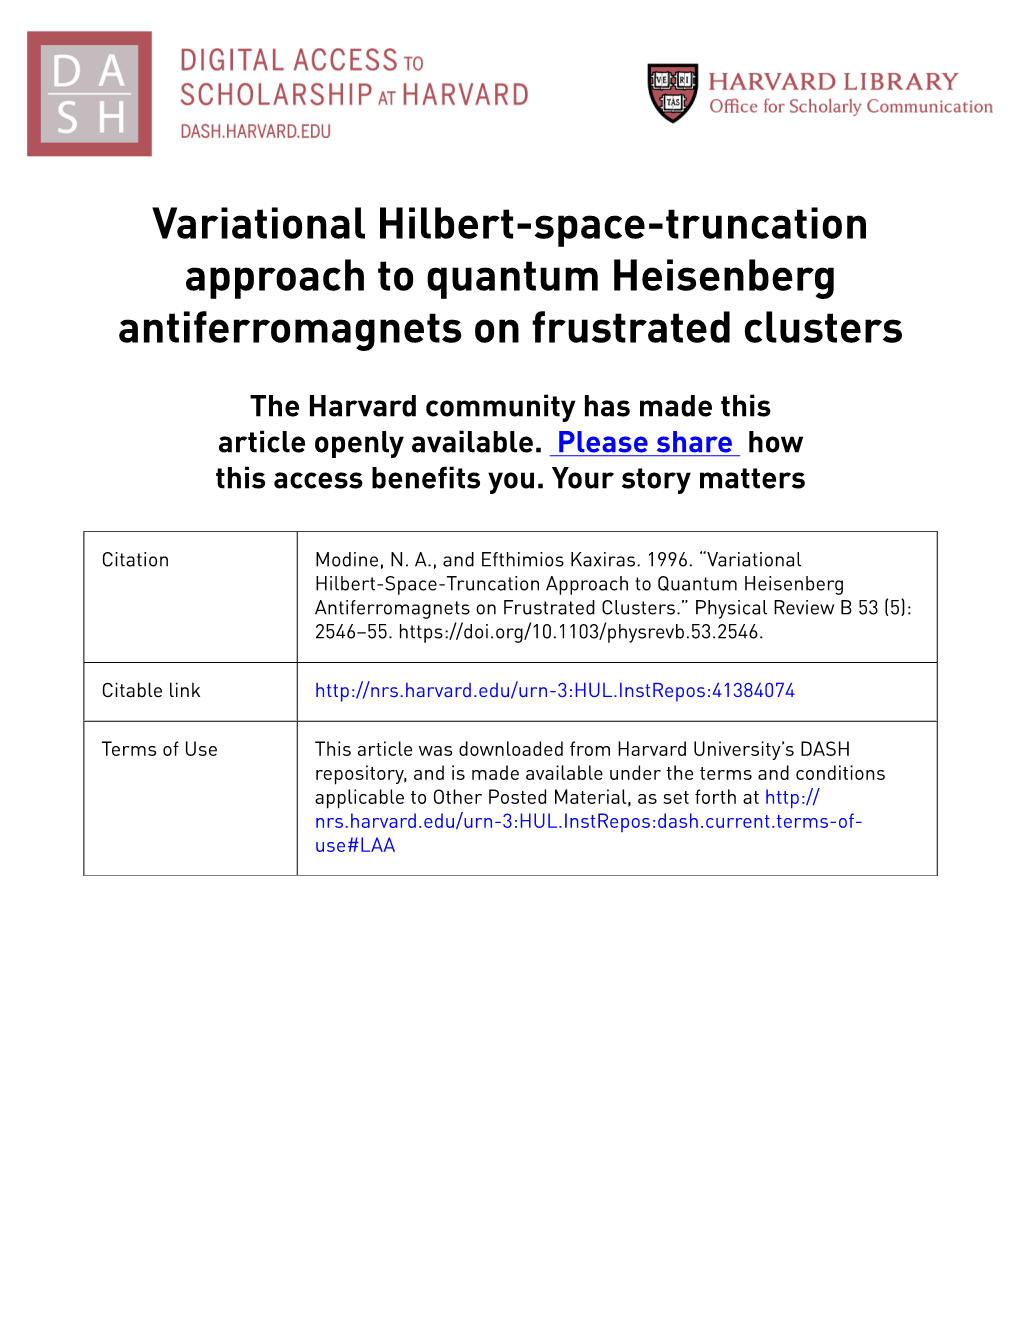 Variational Hilbert-Space-Truncation Approach to Quantum Heisenberg Antiferromagnets on Frustrated Clusters